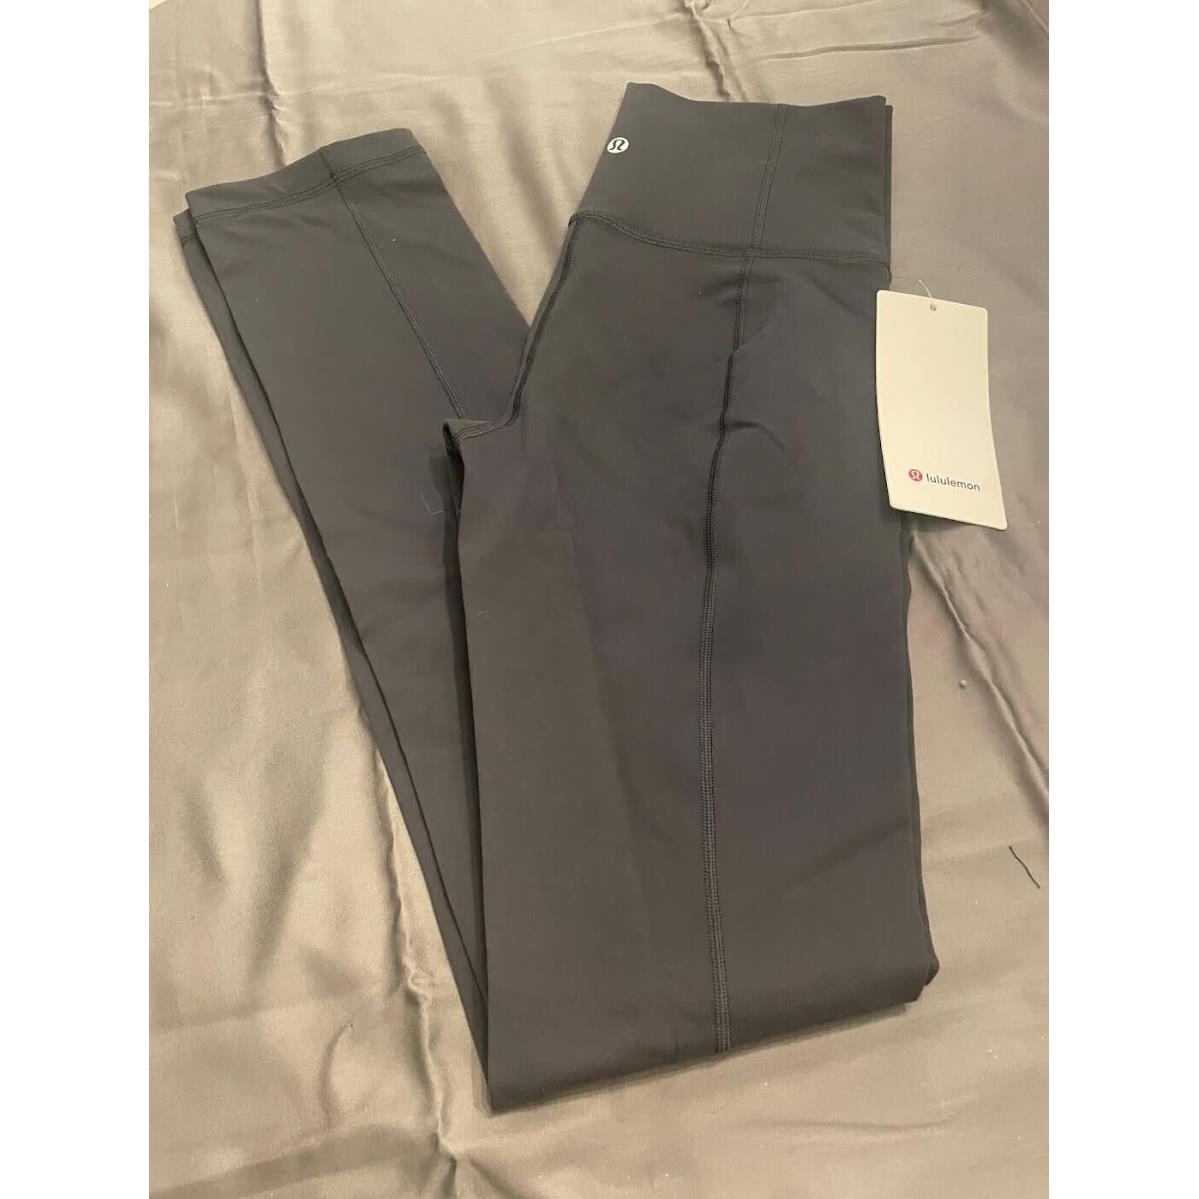 Grey Lululemon Skinny Groove Pant ll Size 6 Inseam 33